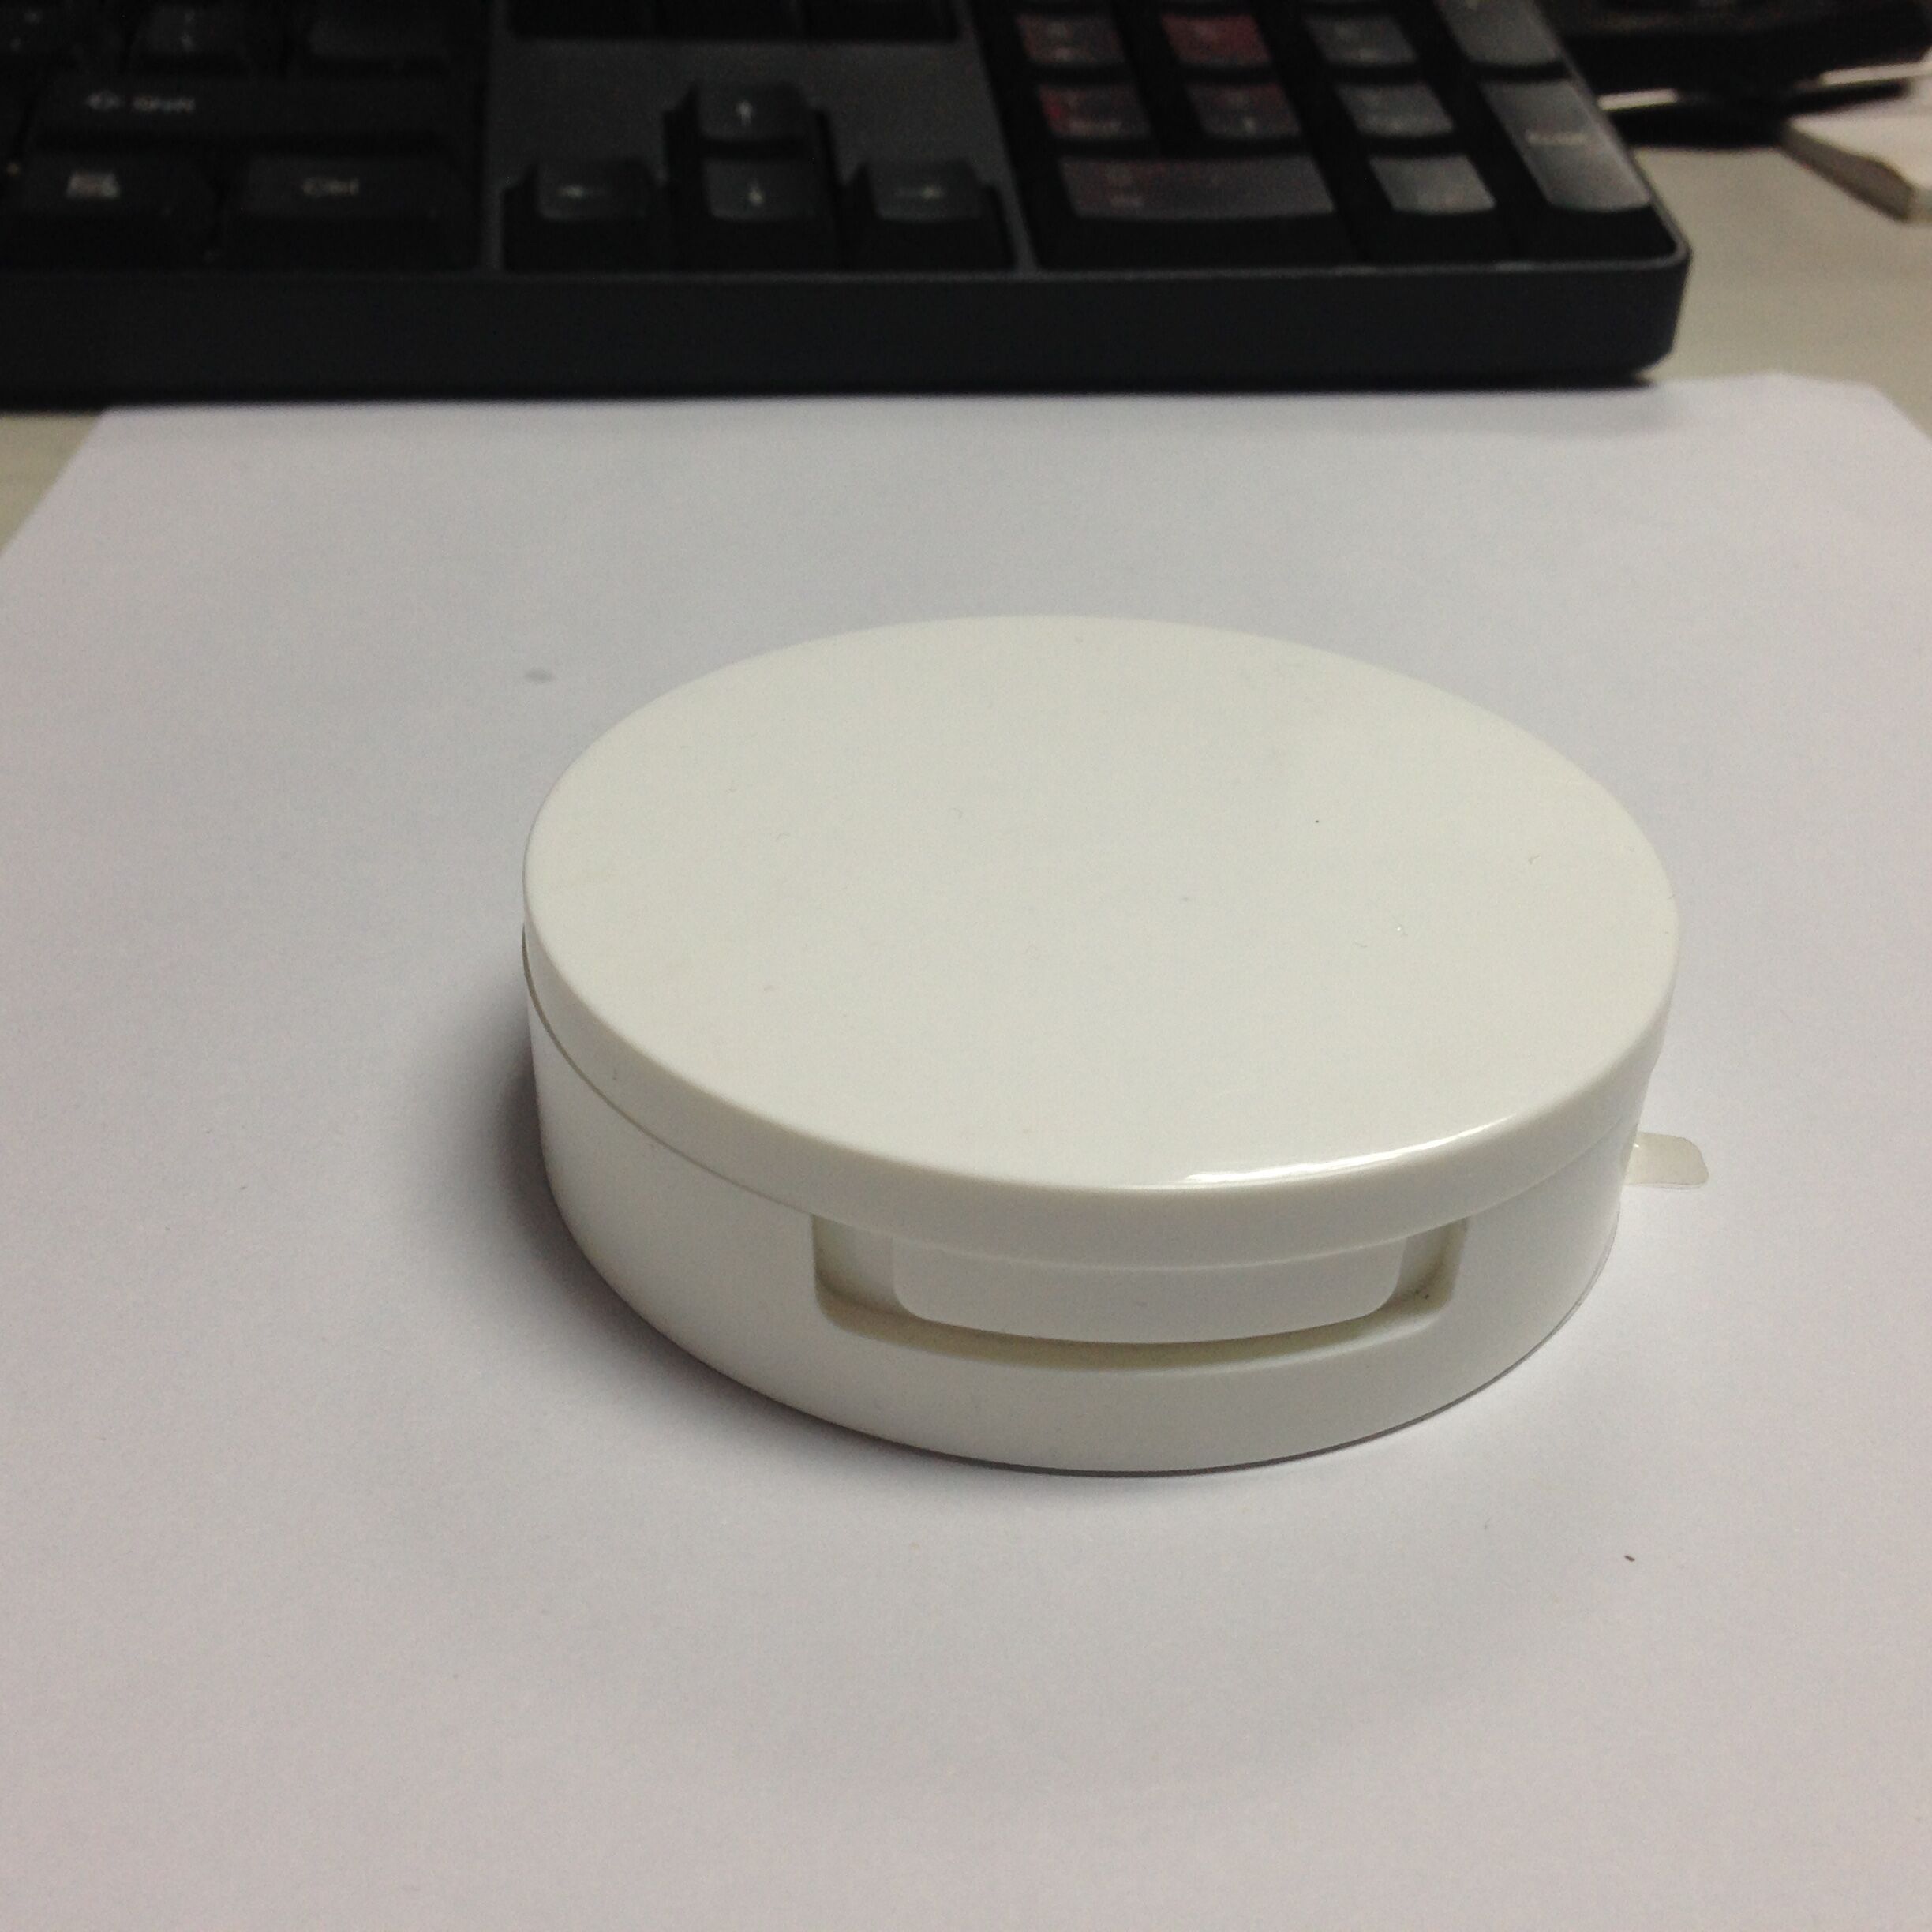 White compact powder case